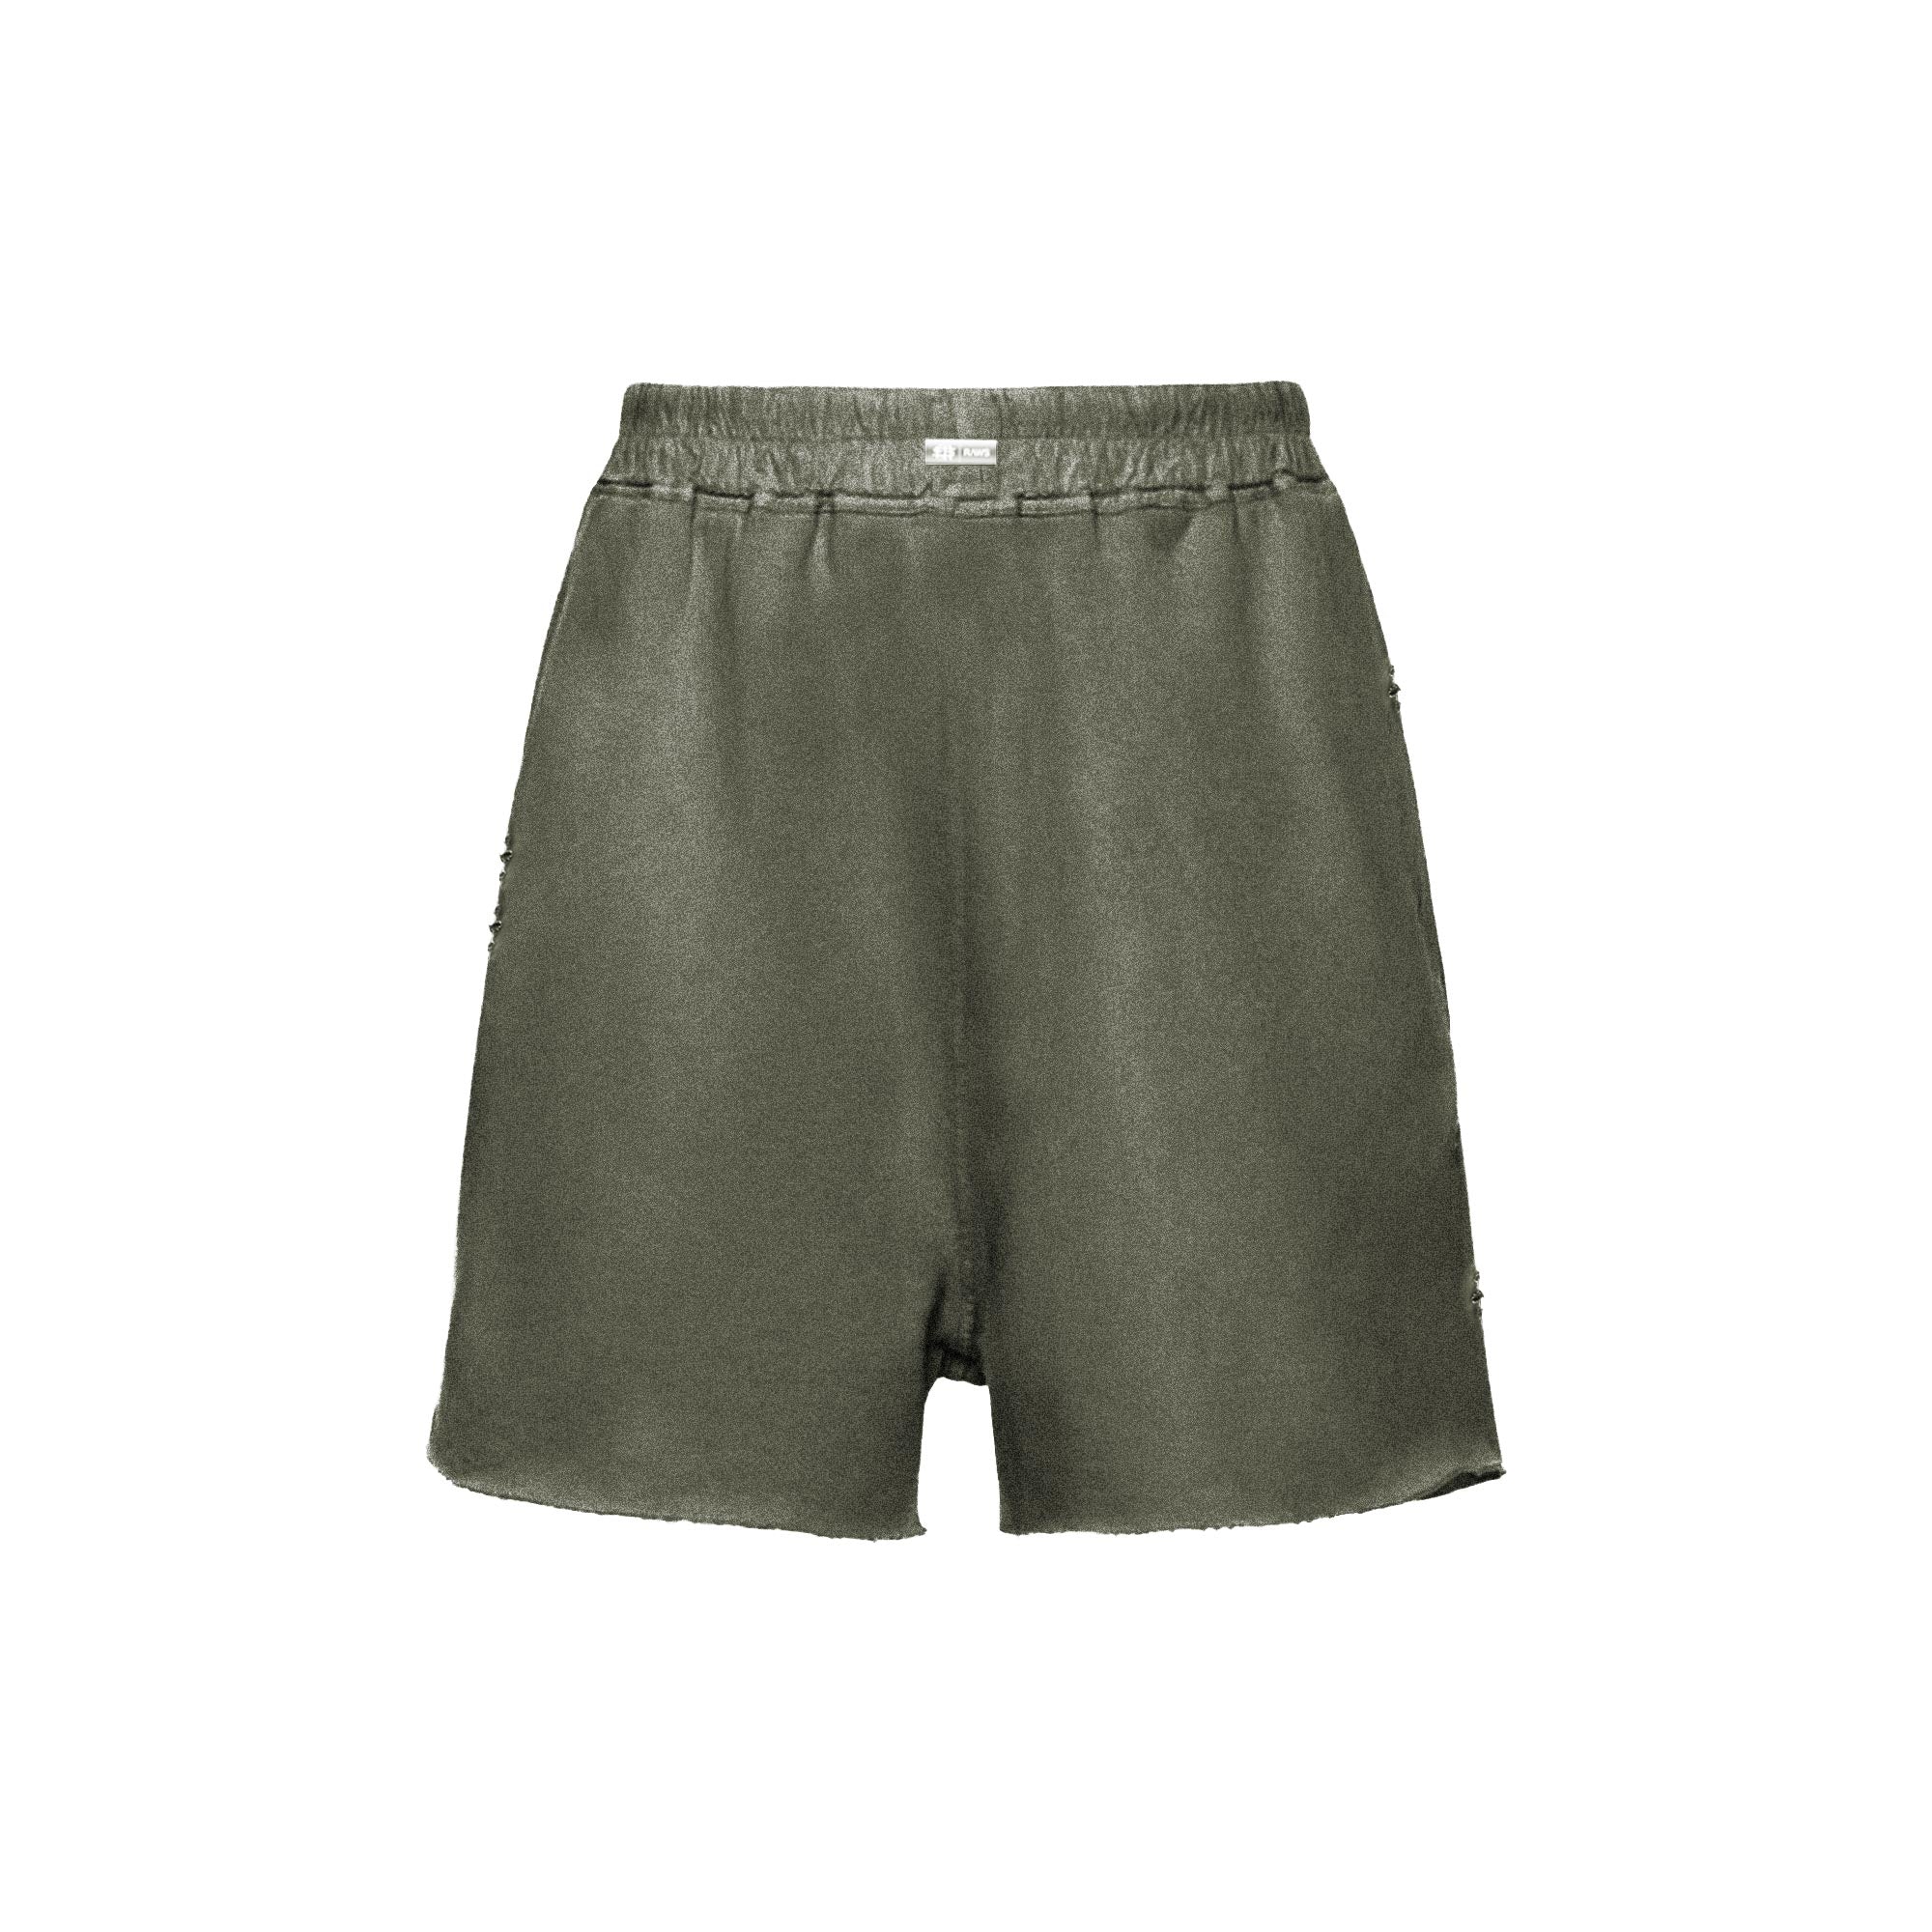 Sole et. Al RAWS Heavyweight Shorts : Khaki grønn